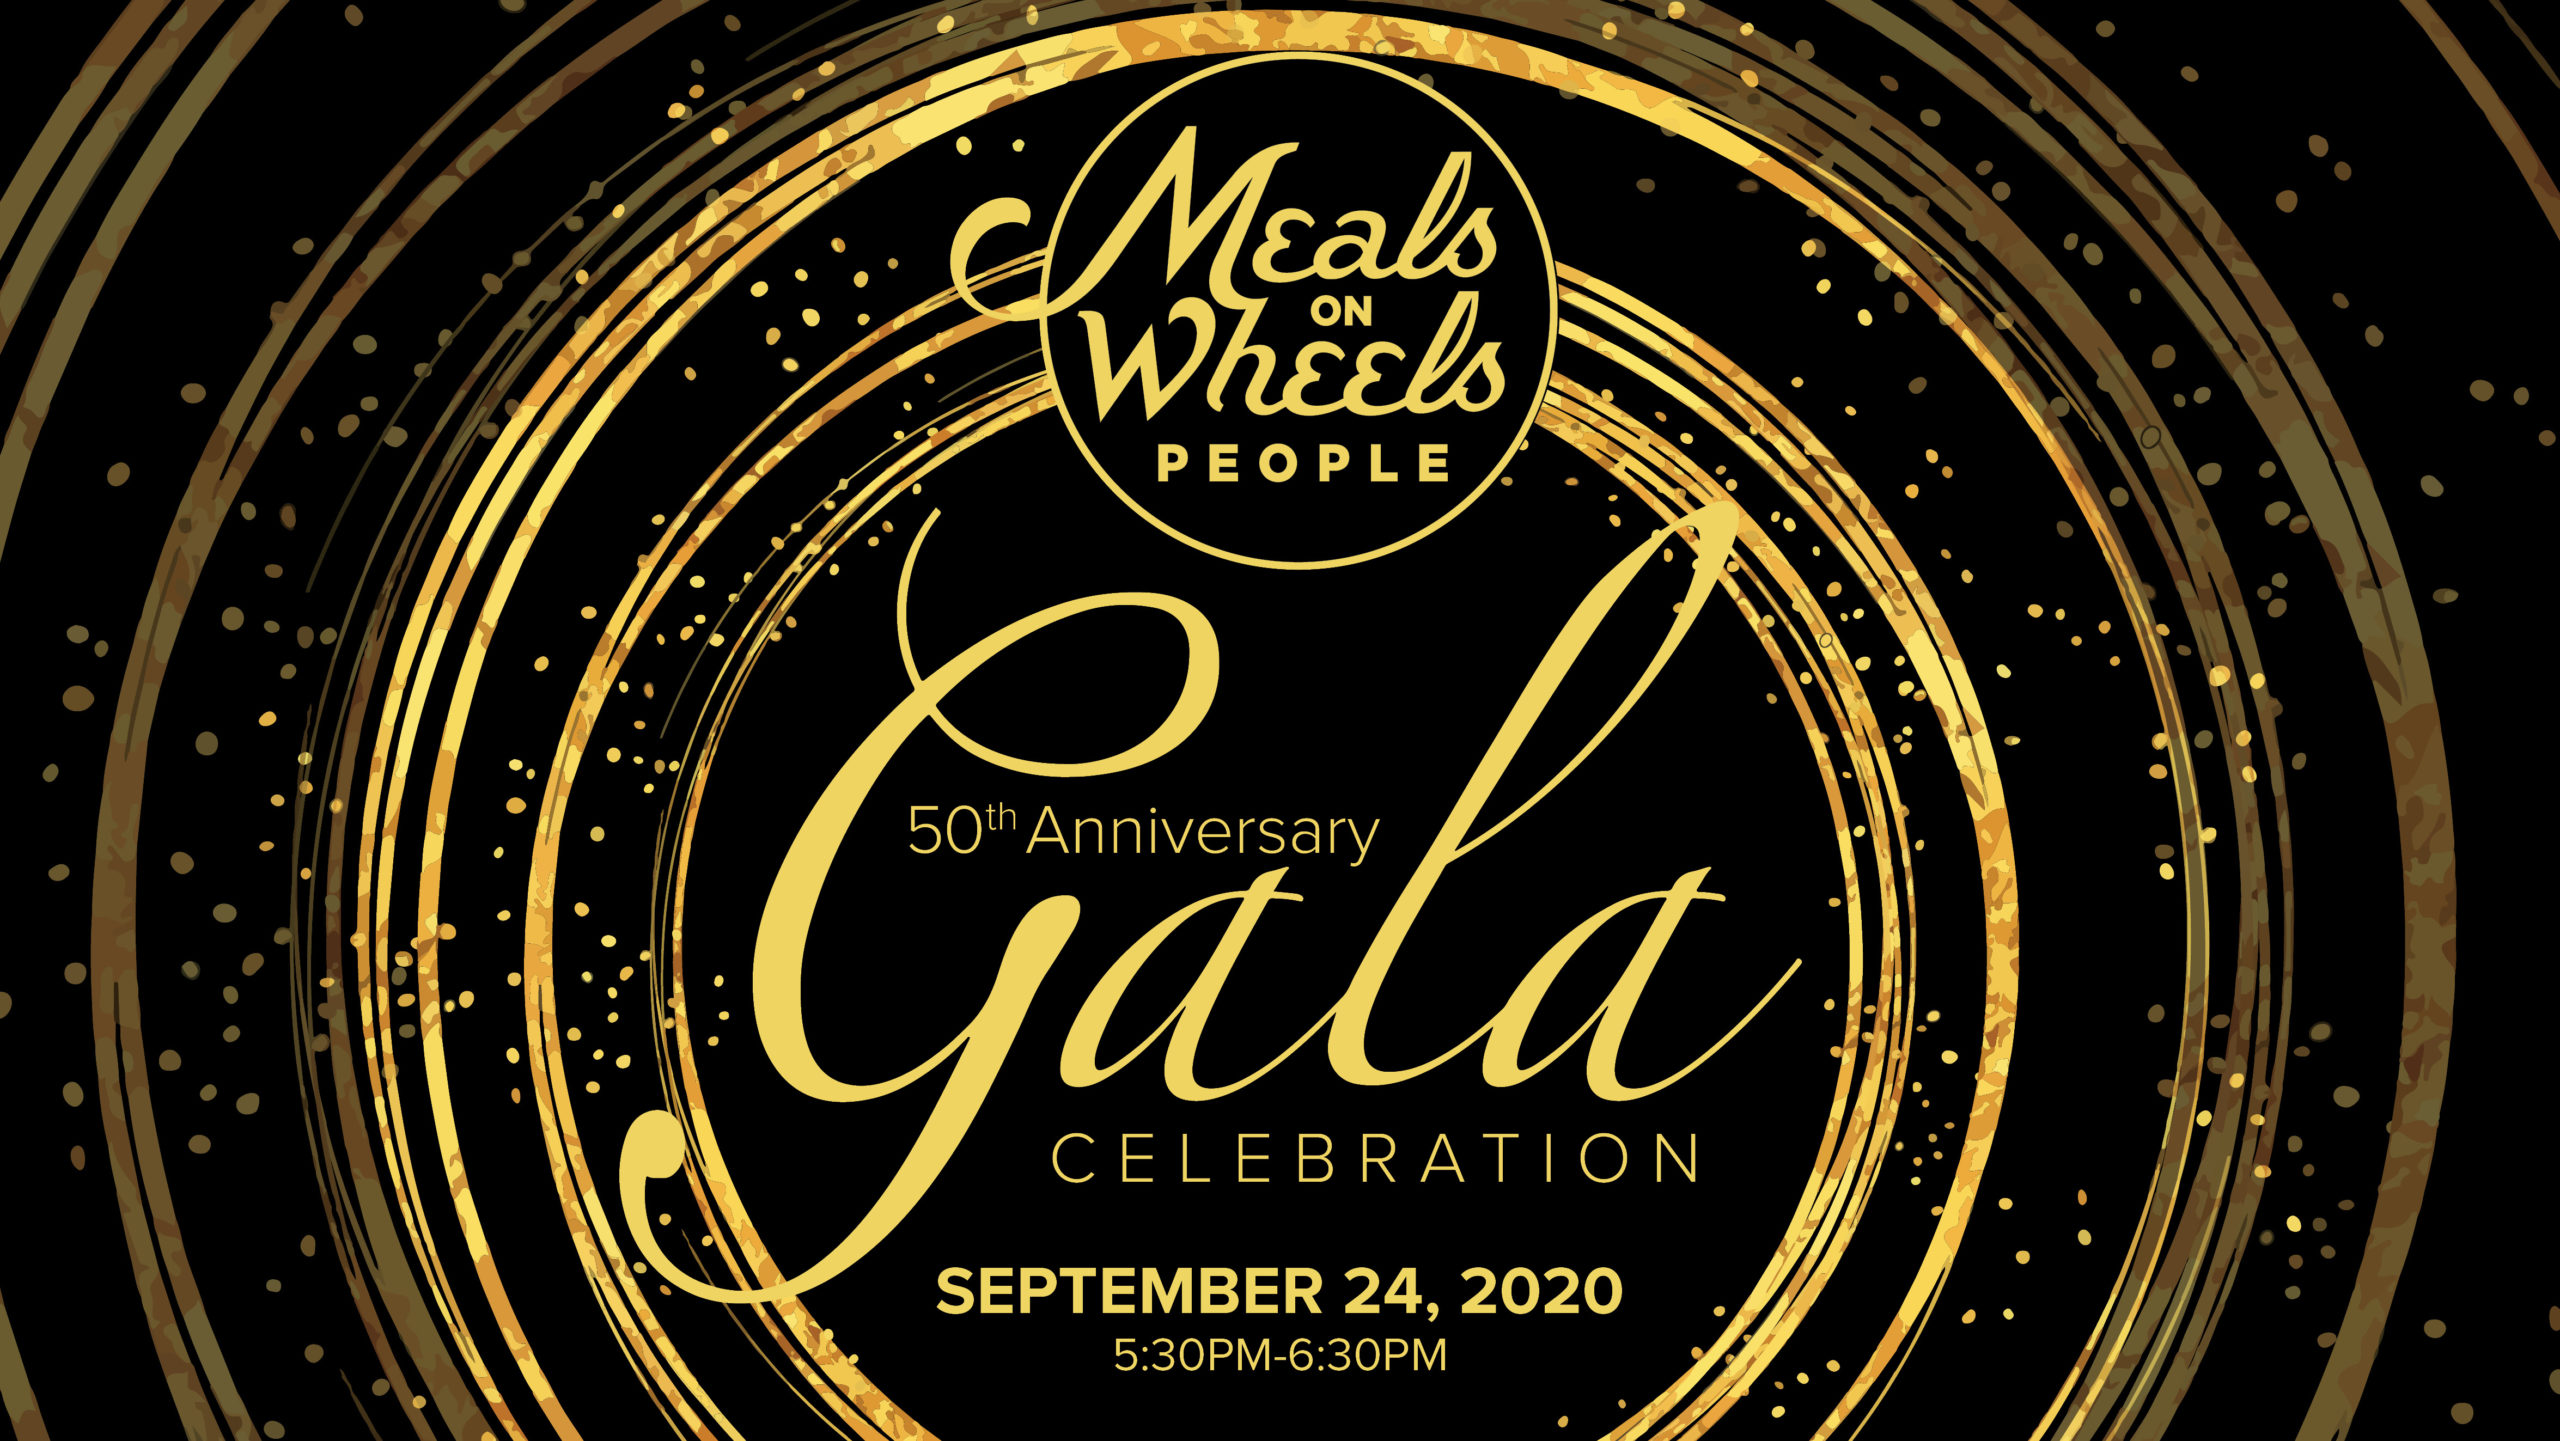 50th Anniversary Gala Celebration